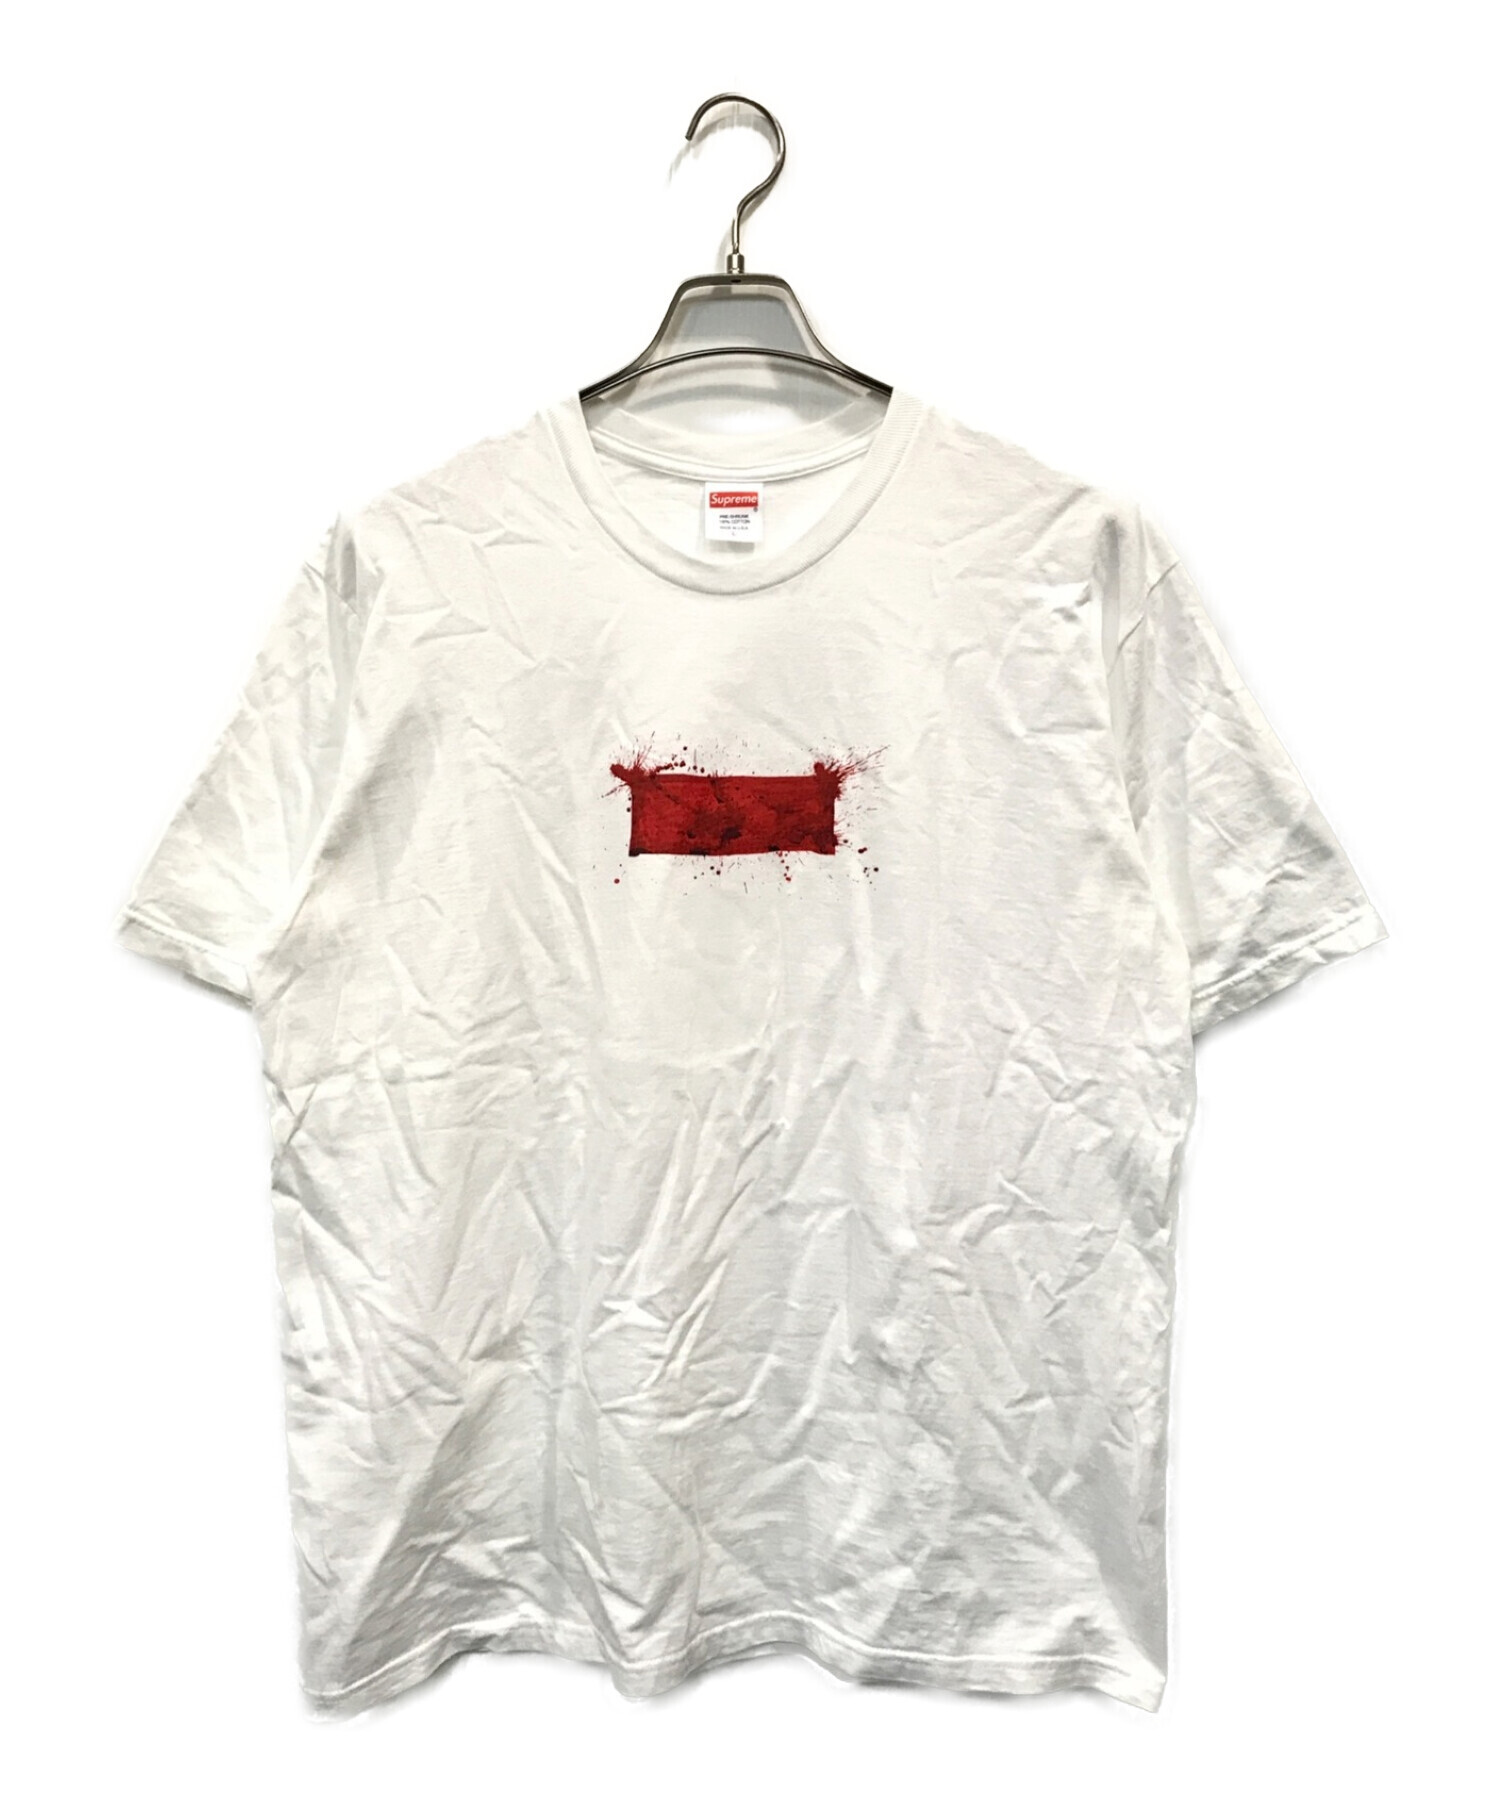 Ralph Steadman Box Logo Tee Black LサイズTシャツ/カットソー(半袖/袖なし)